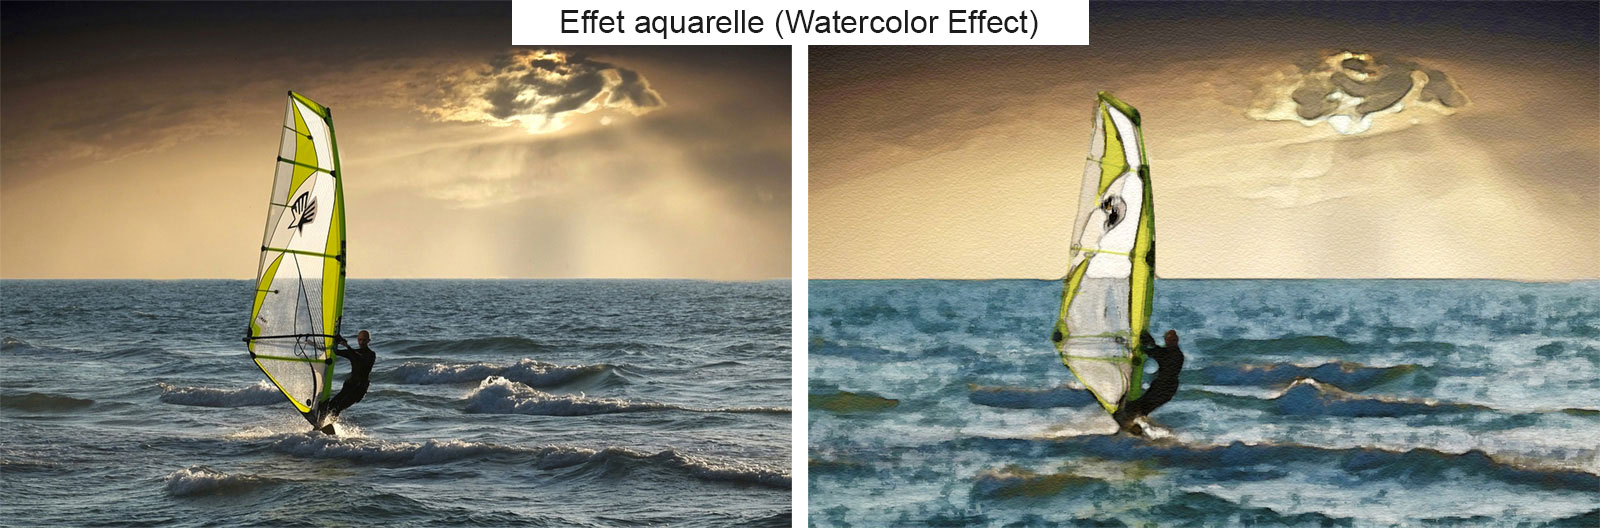 Effet Aquarelle (Watercolor Effect)